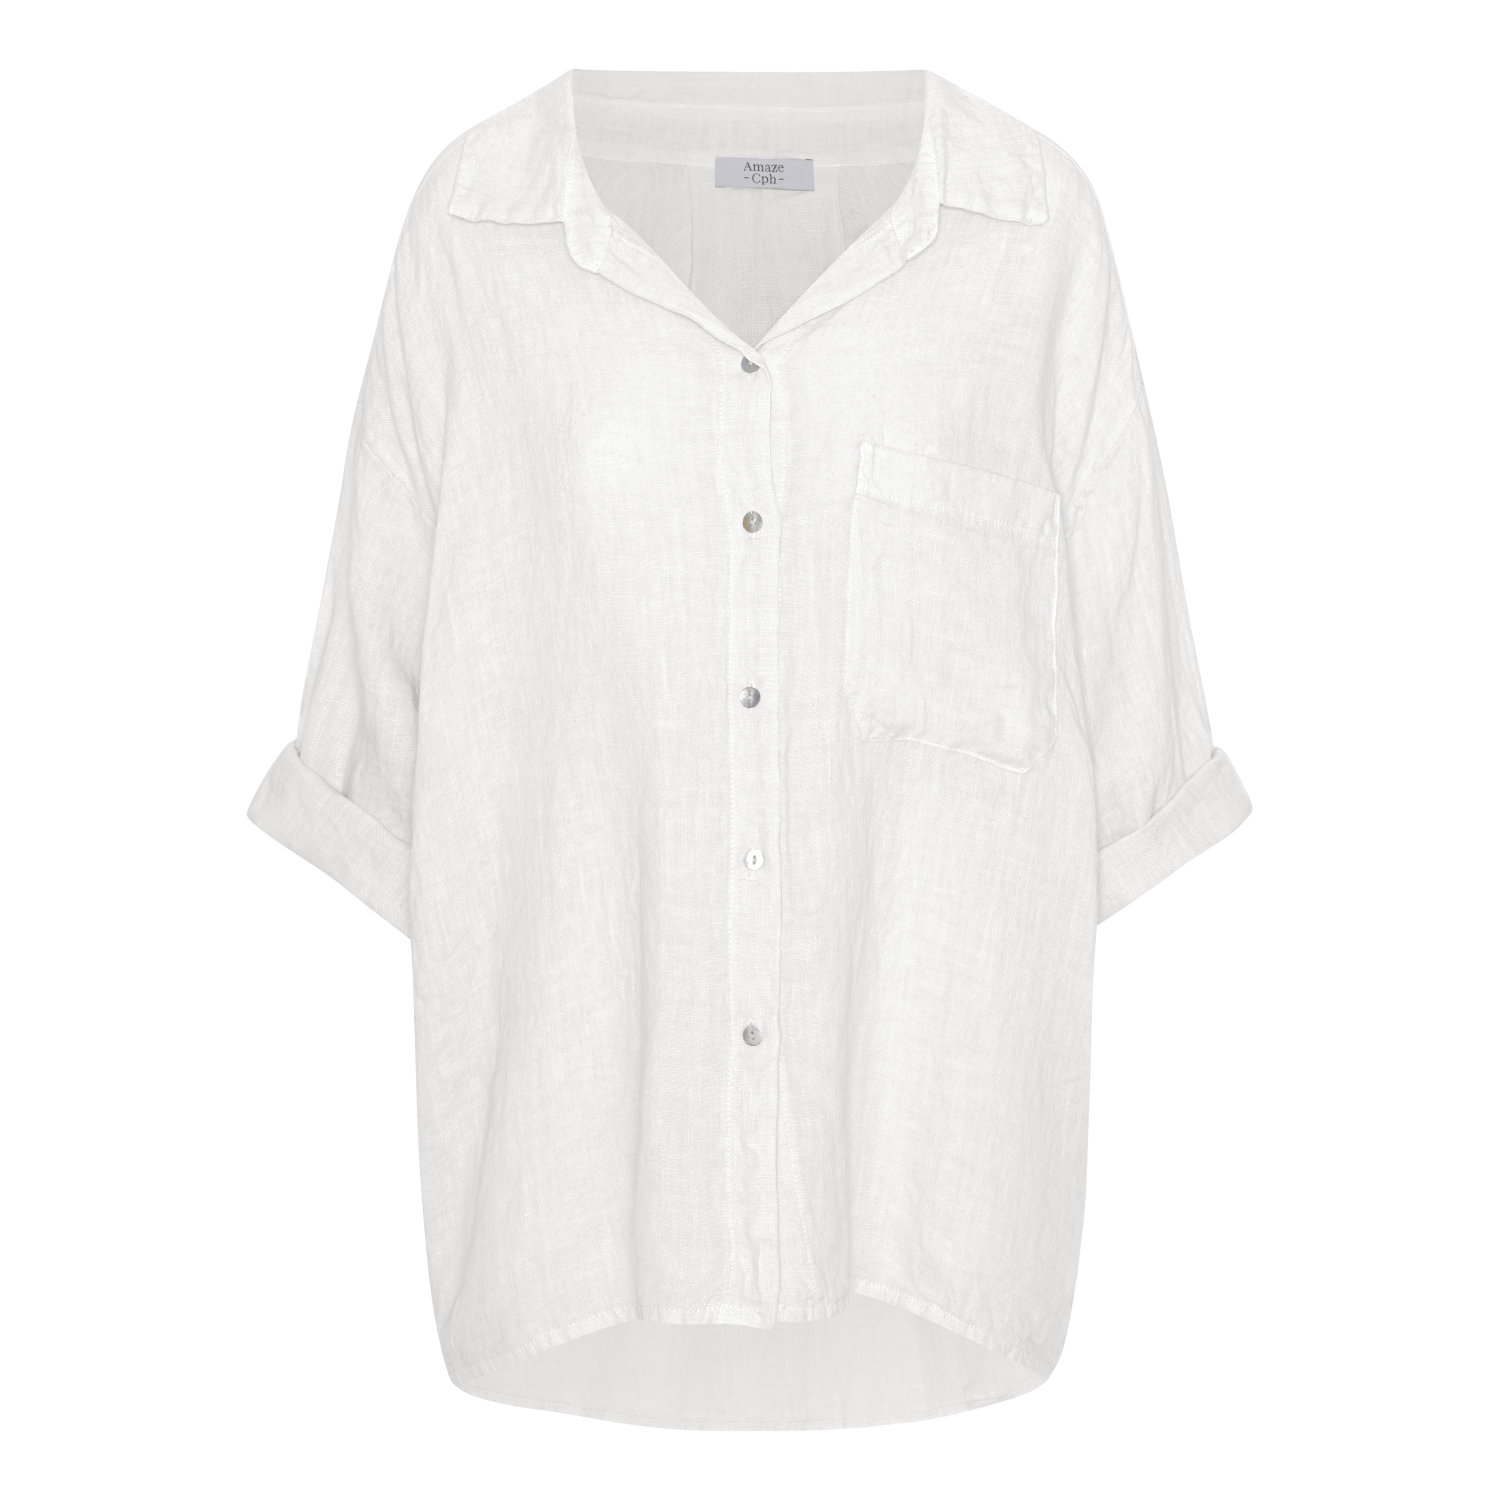 Oversized Linen Shirt - White - Amaze Cph - White - S/M